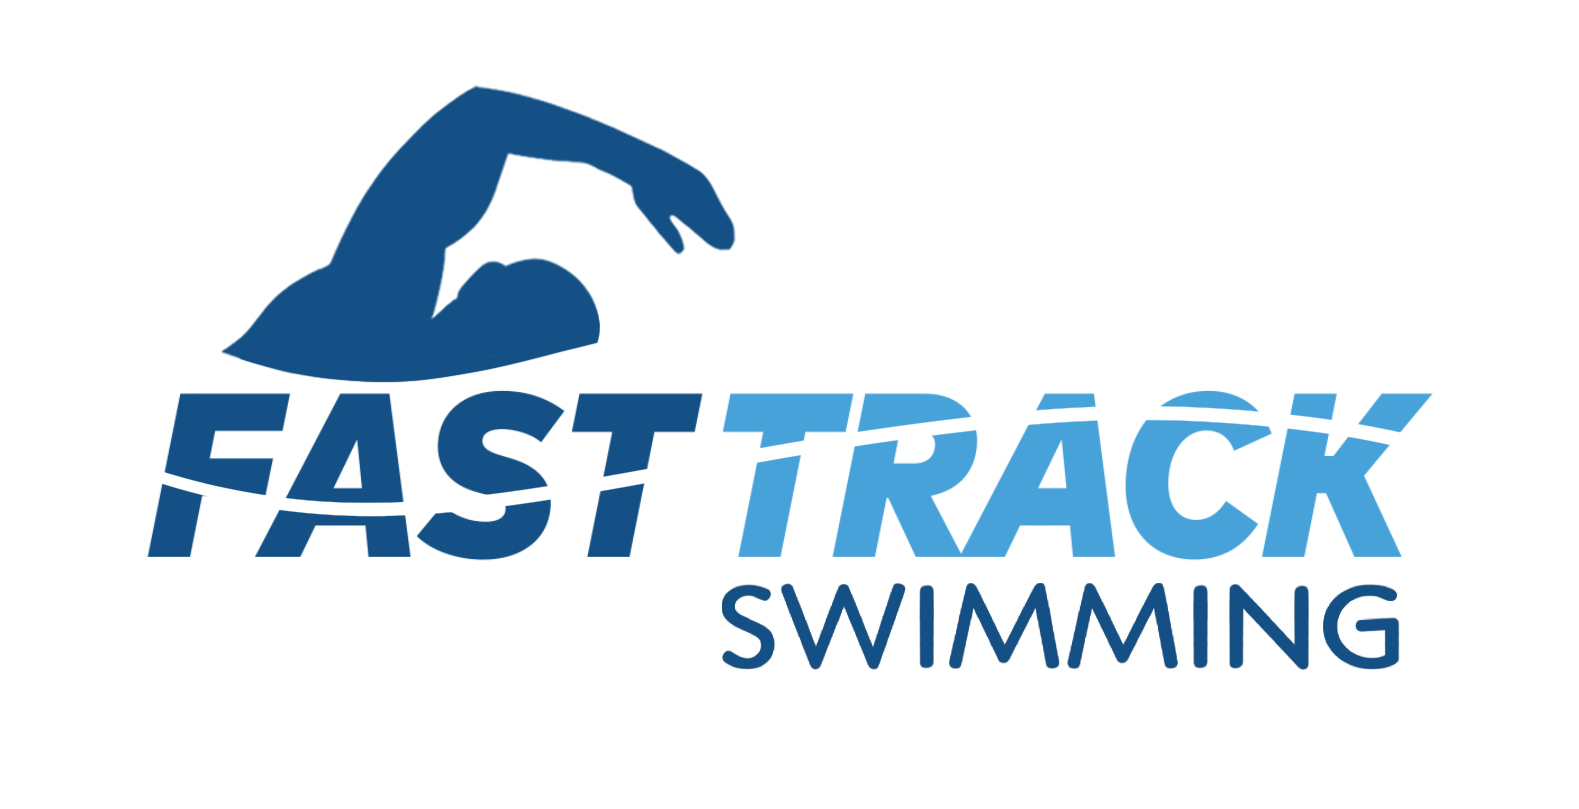 https://fasttrackswimming.com/images/fast-track-swimming-logo.jpg